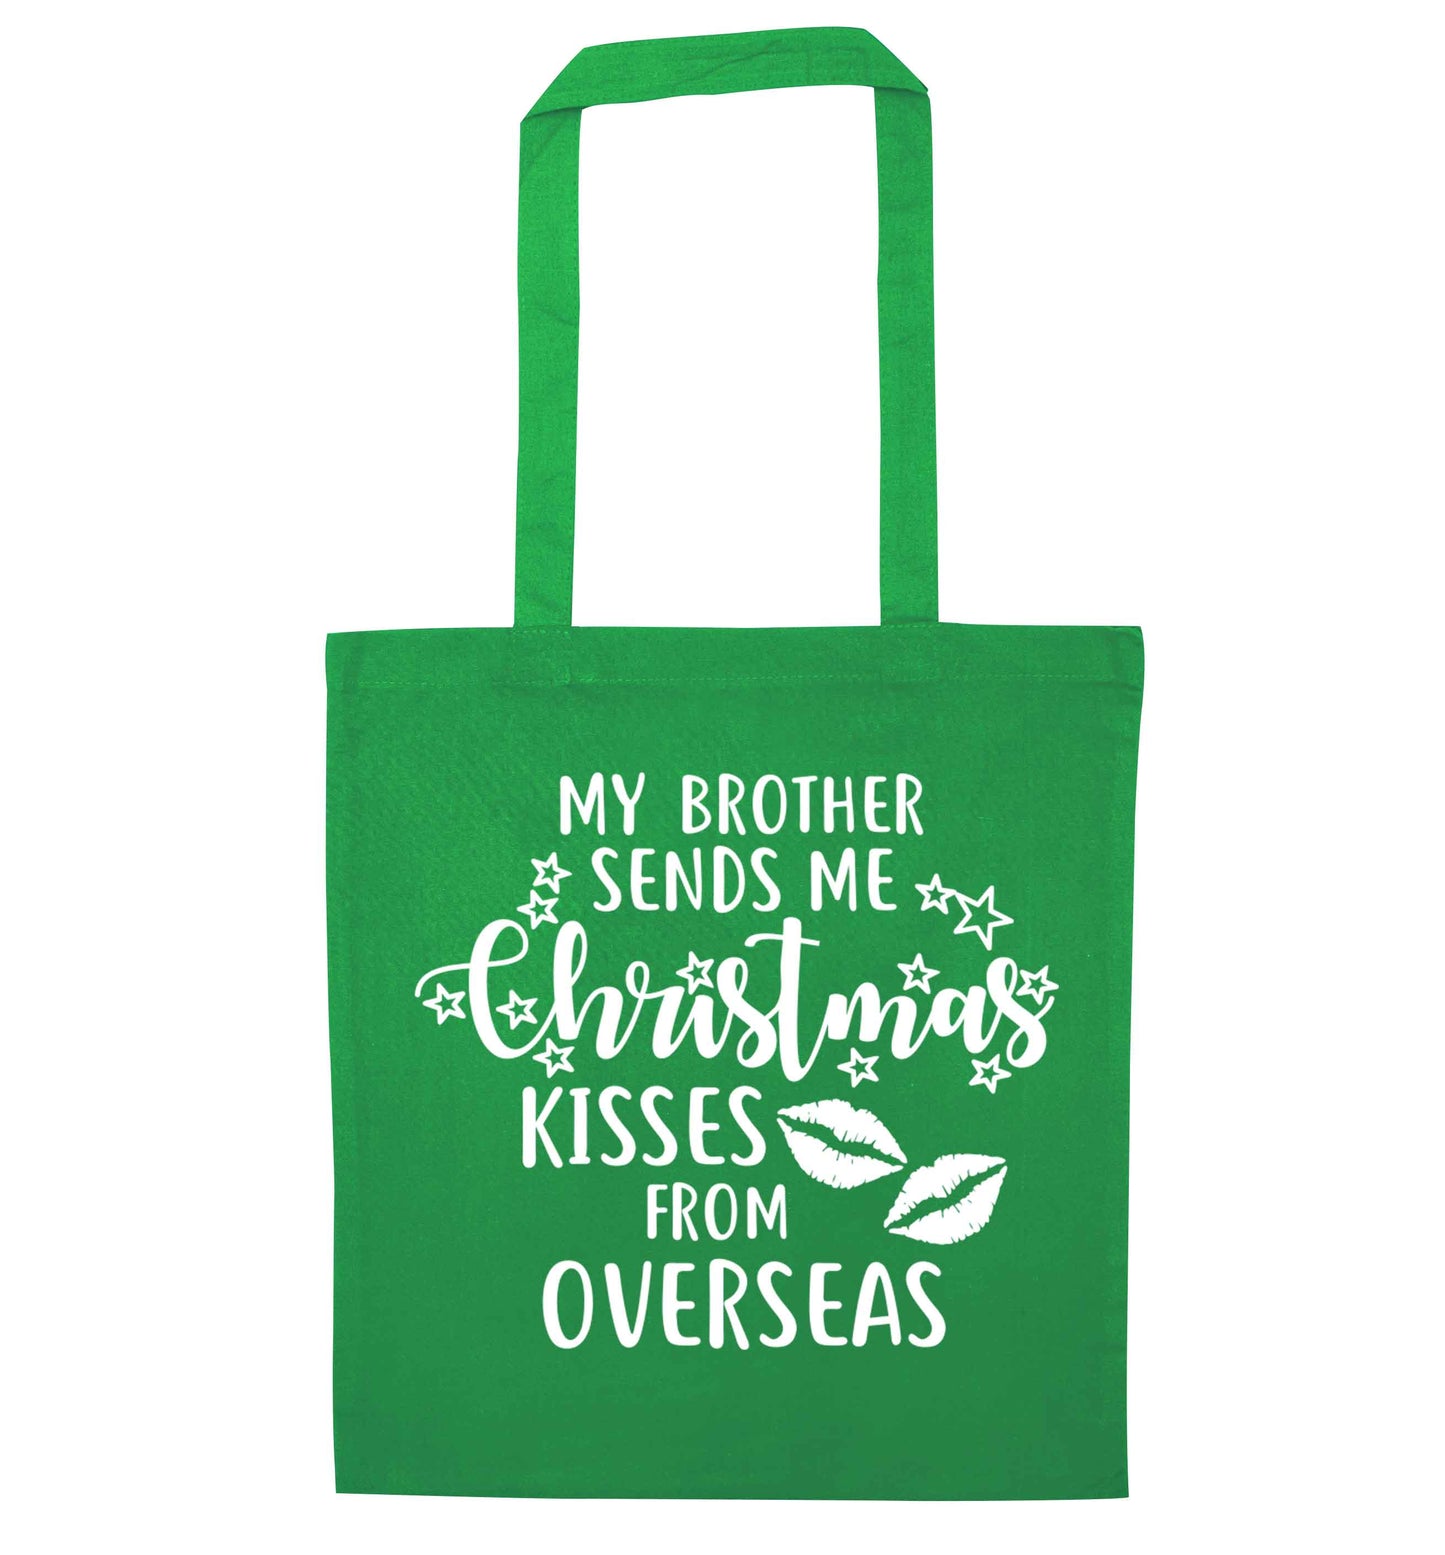 Brother Christmas Kisses Overseas green tote bag